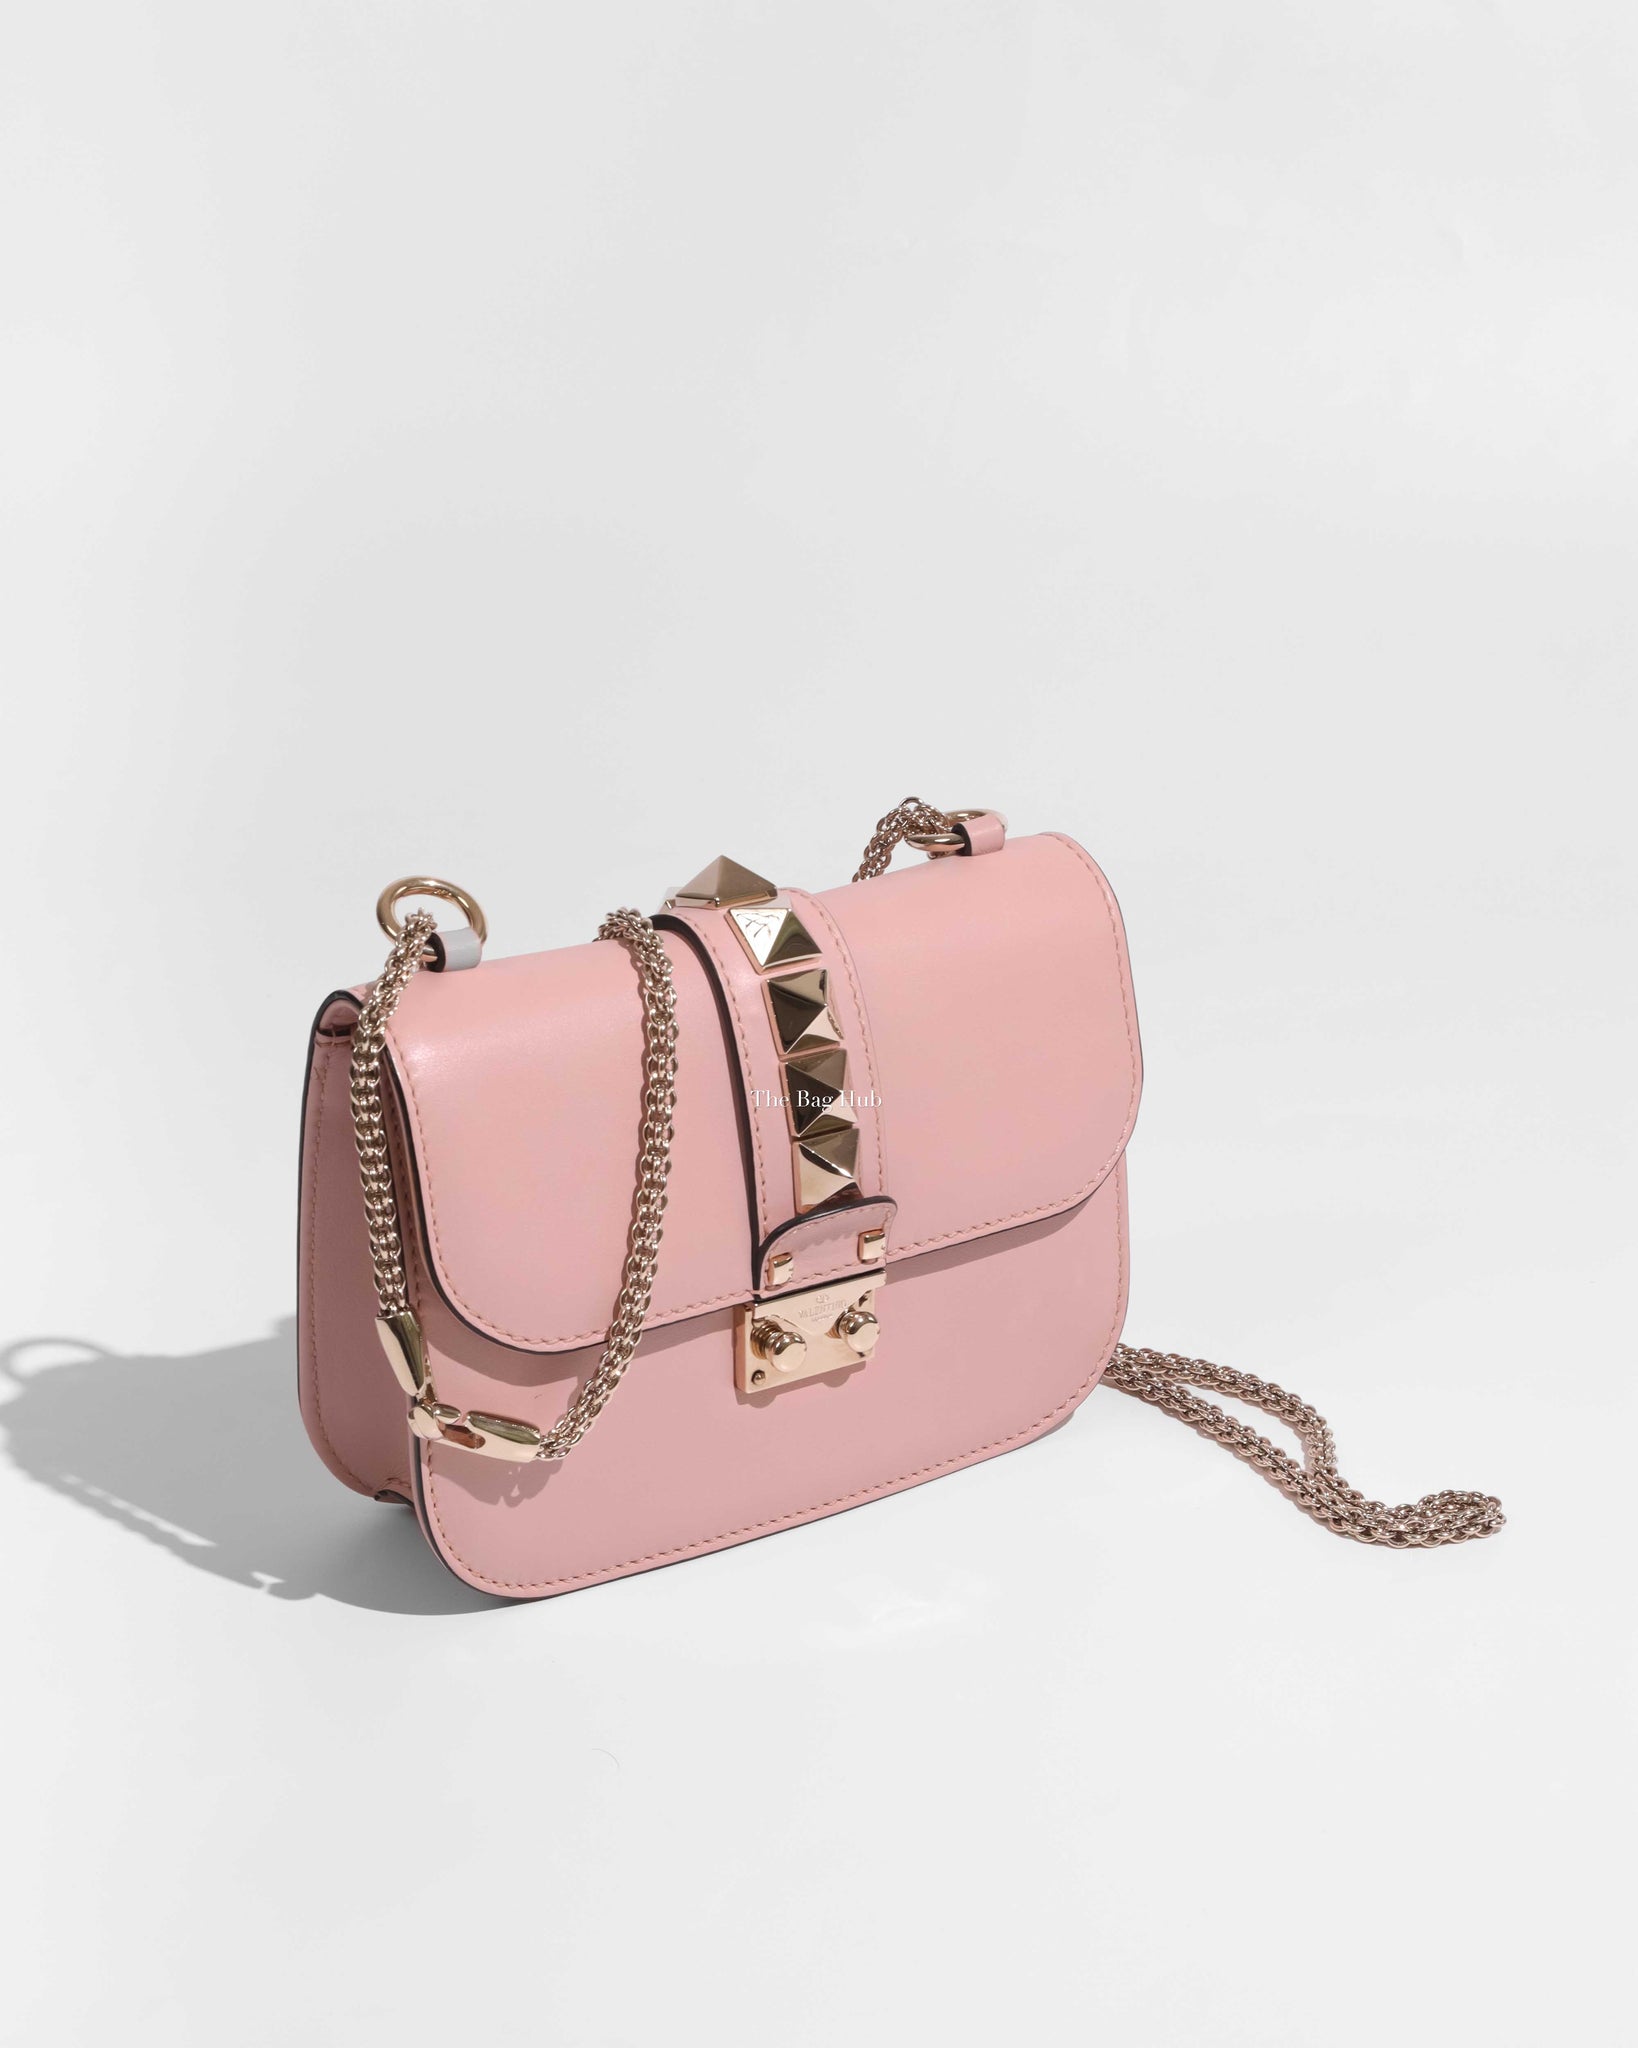 Valentino Garavani Pink Leather Rockstud Glam Lock Small Flap Bag, Designer Brand, Authentic Valentino Garavani